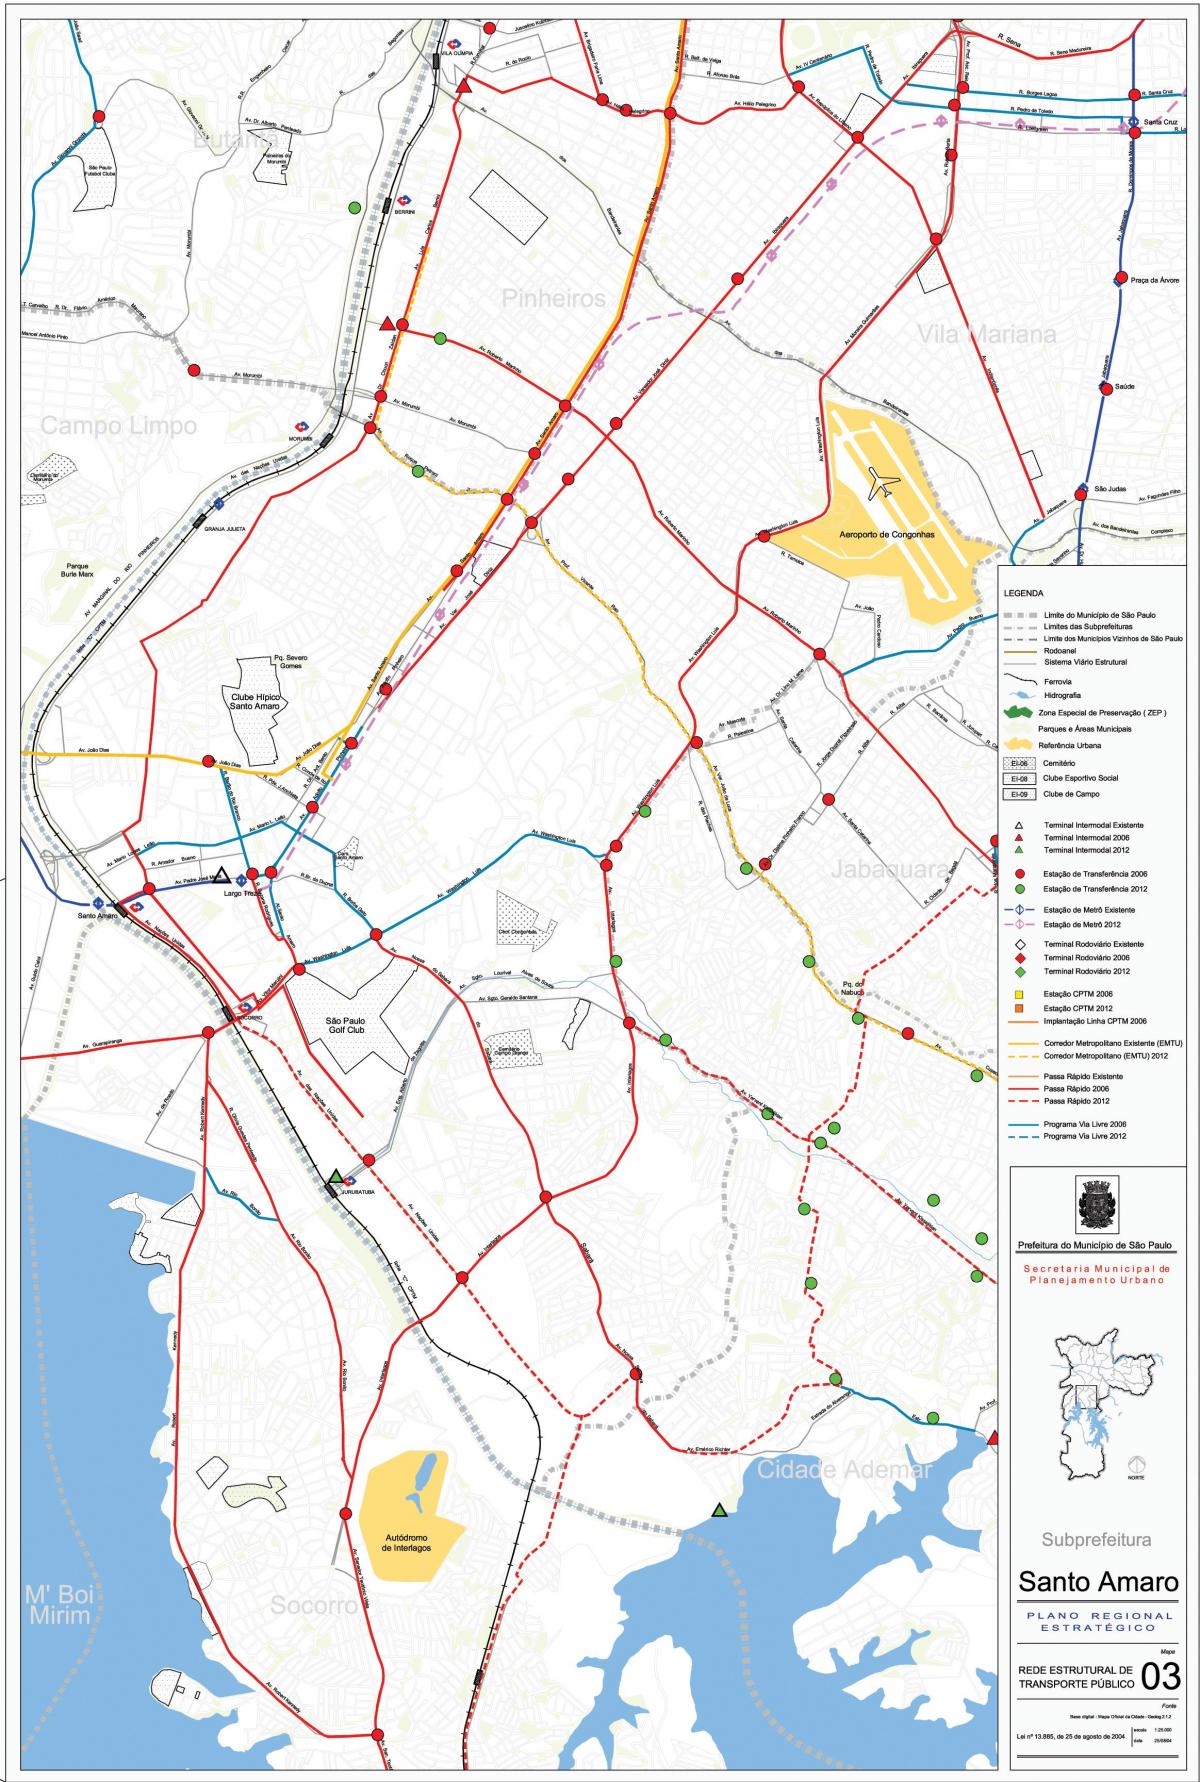 Mapa de Santo Amaro, São Paulo - transportes Públicos